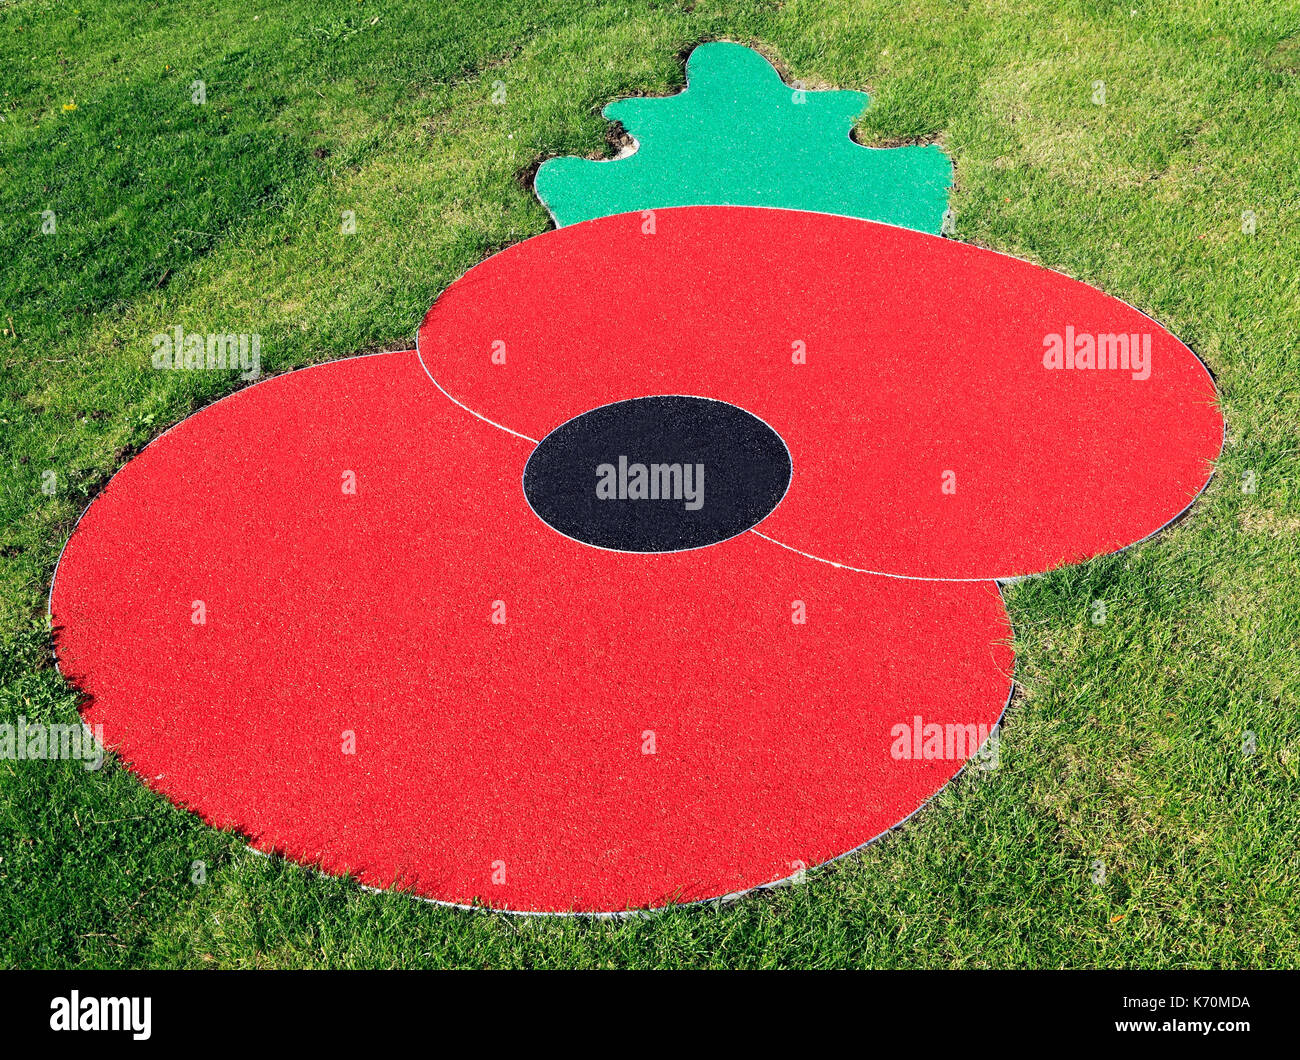 Remembrance Day Poppy, logo, symbol, set in turf, lawn, grass, Hunstanton, Norfolk, England, UK, war memorial, memorials, emblem Stock Photo